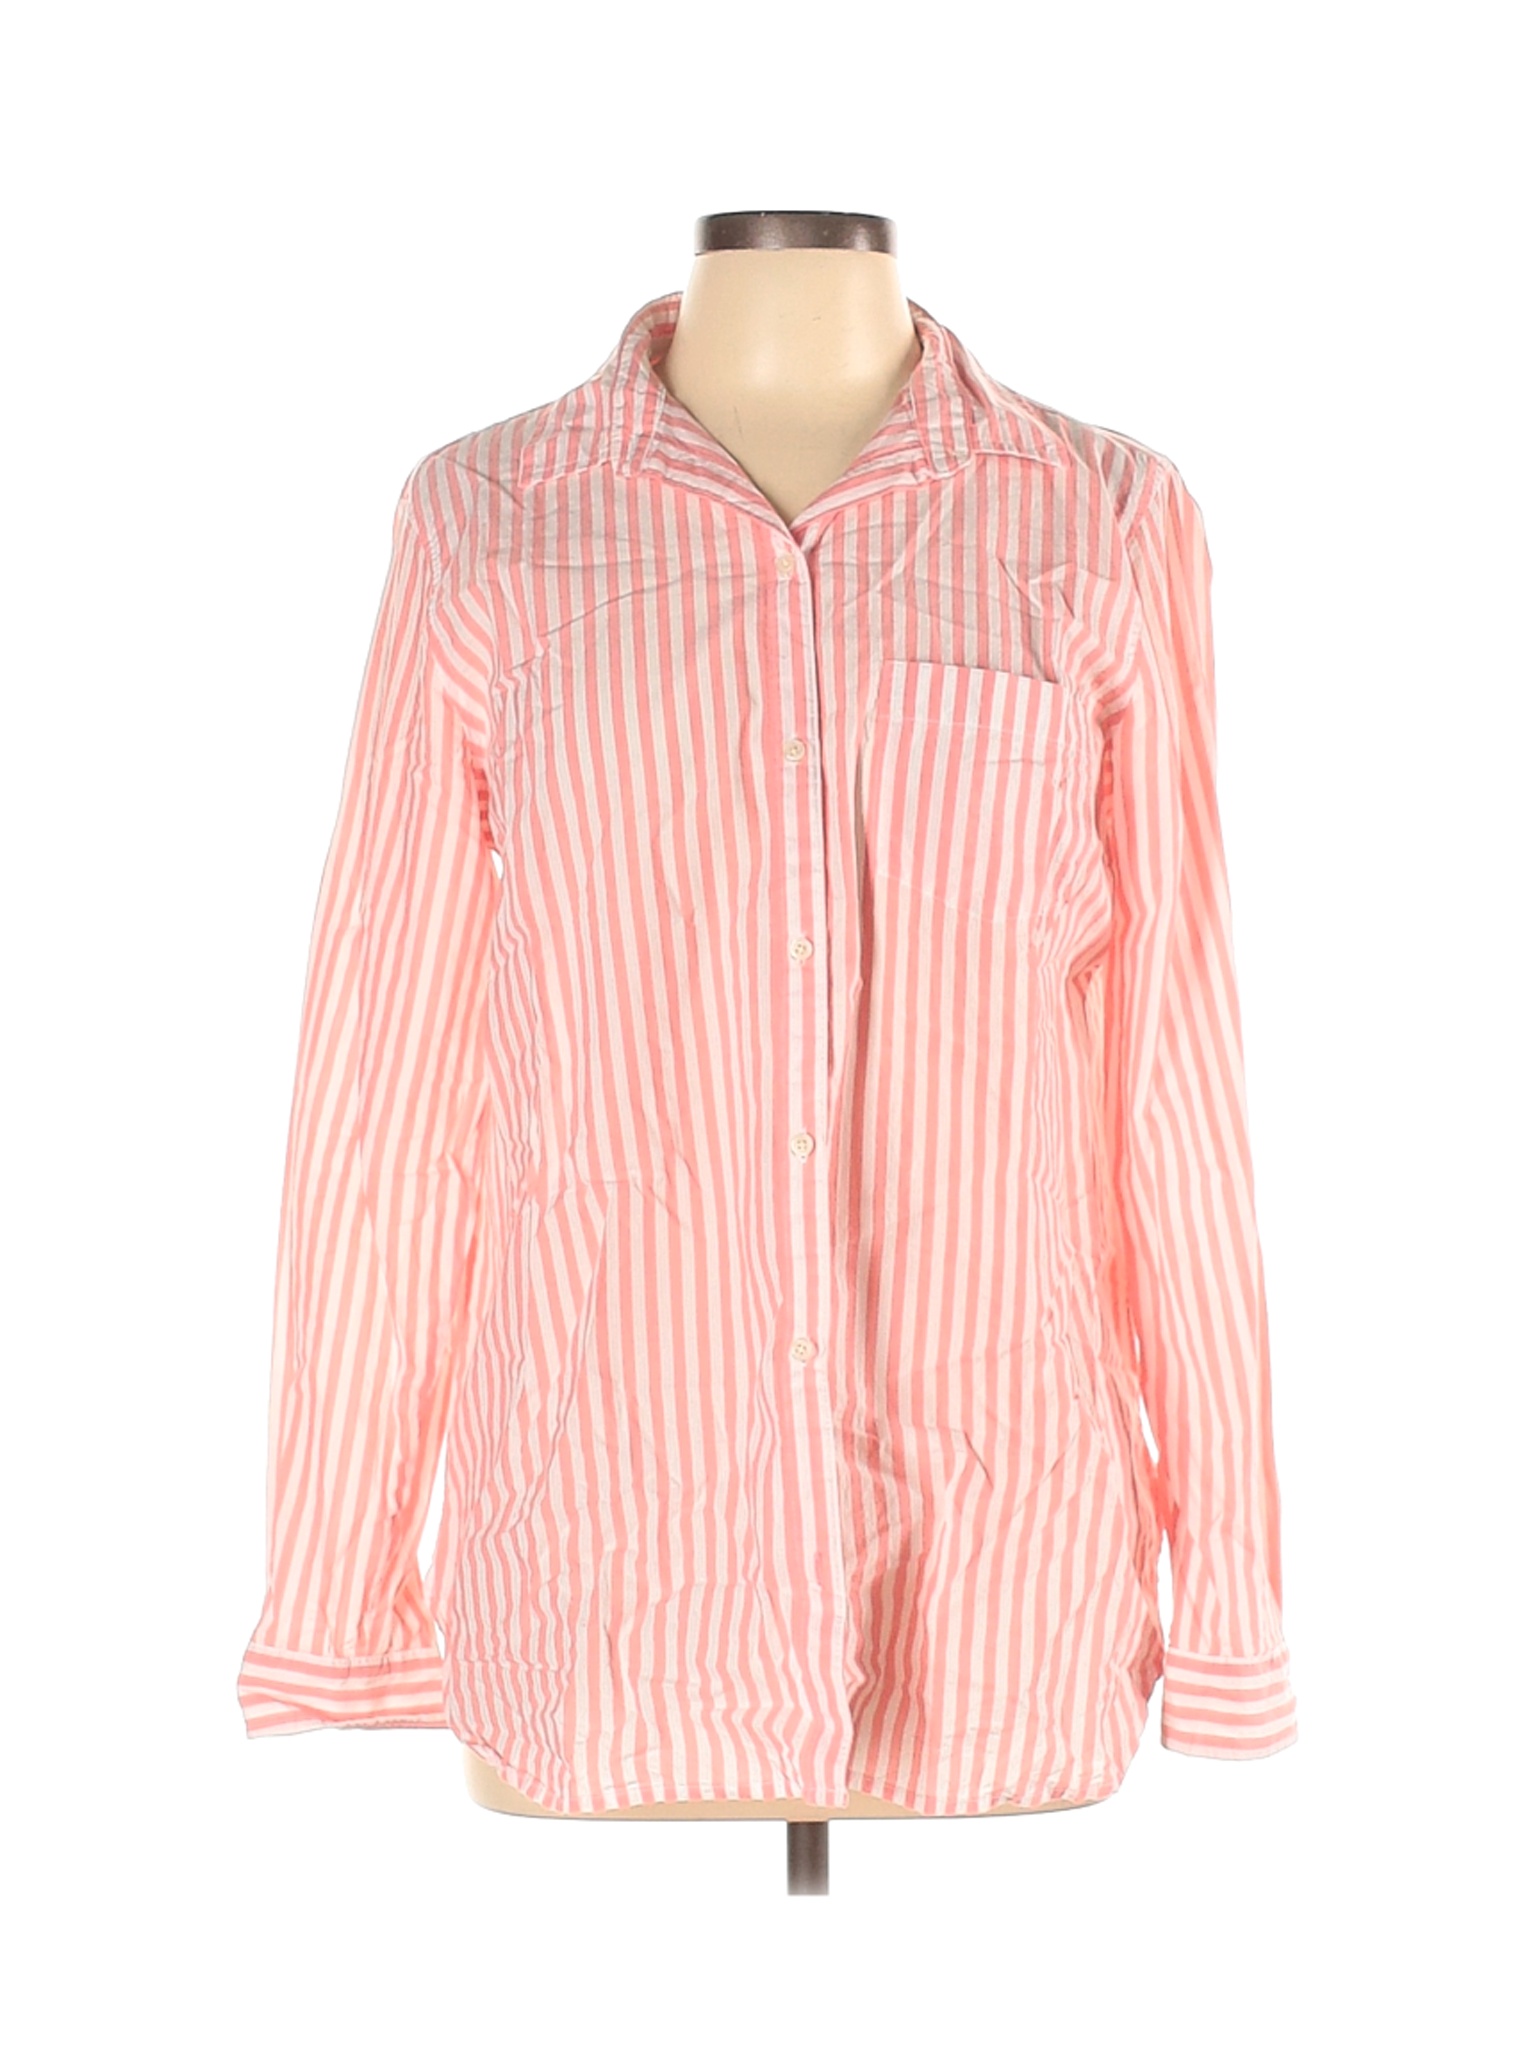 Old Navy Women Pink Long Sleeve Button-Down Shirt L | eBay